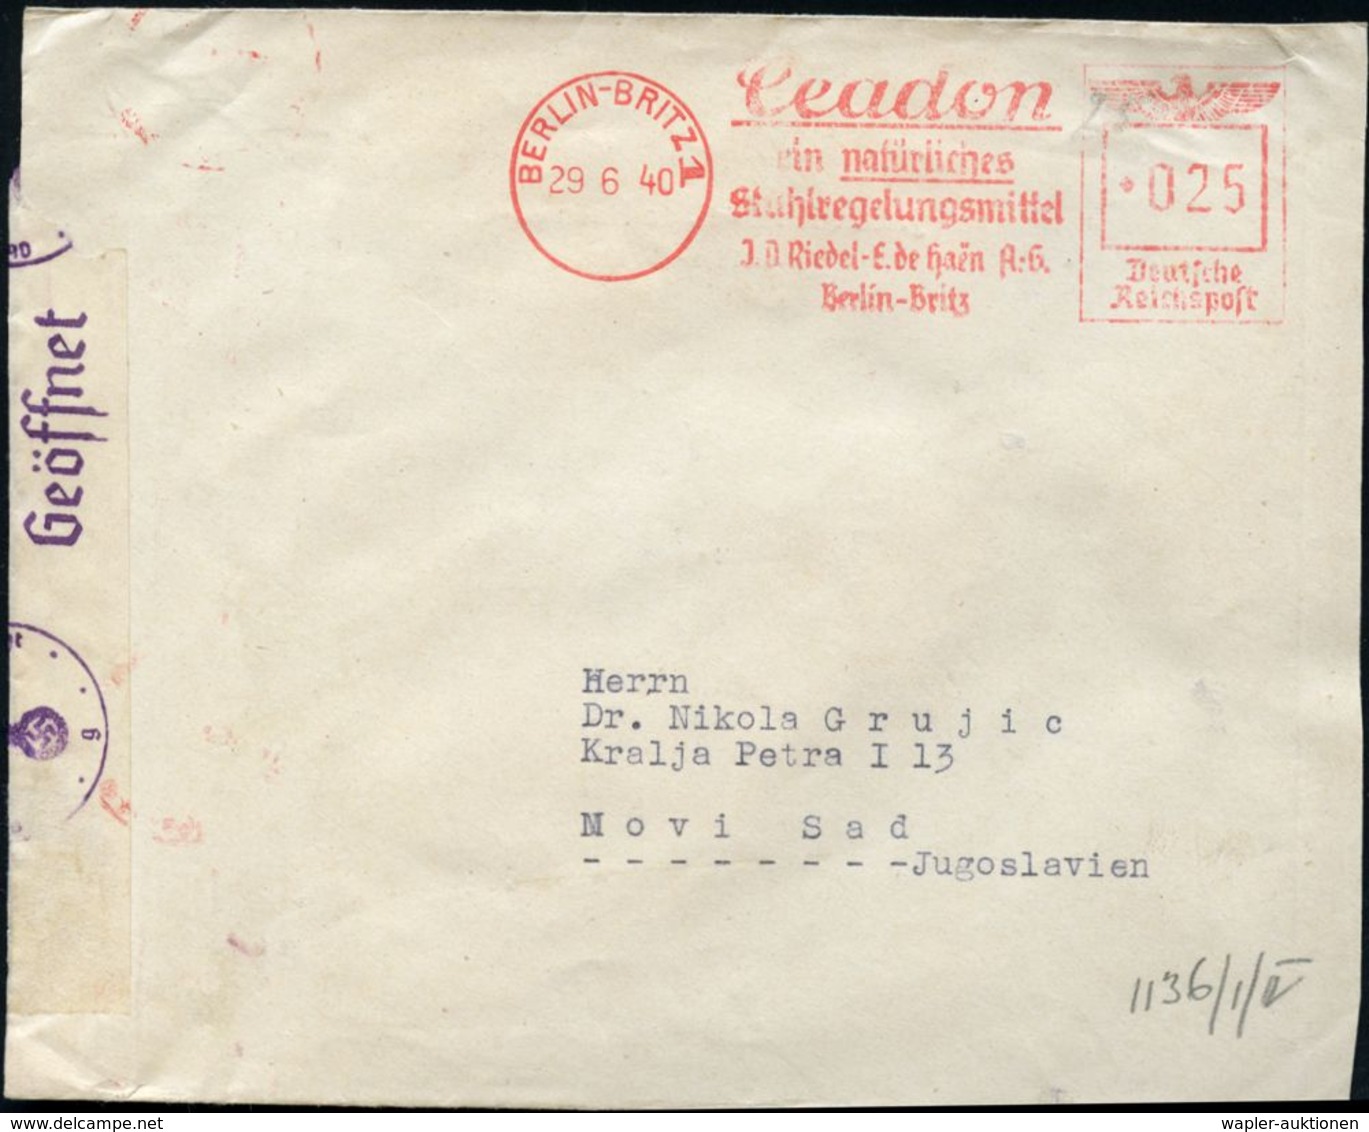 BERLIN-BRITZ 1/ Ceadon/ Ein Natürliches/ Stuhlregelungsmittel/ J.D.Riedel-E De Haen A.G. 1940 (29.6.) AFS 025 Pf. + OKW- - Chimie